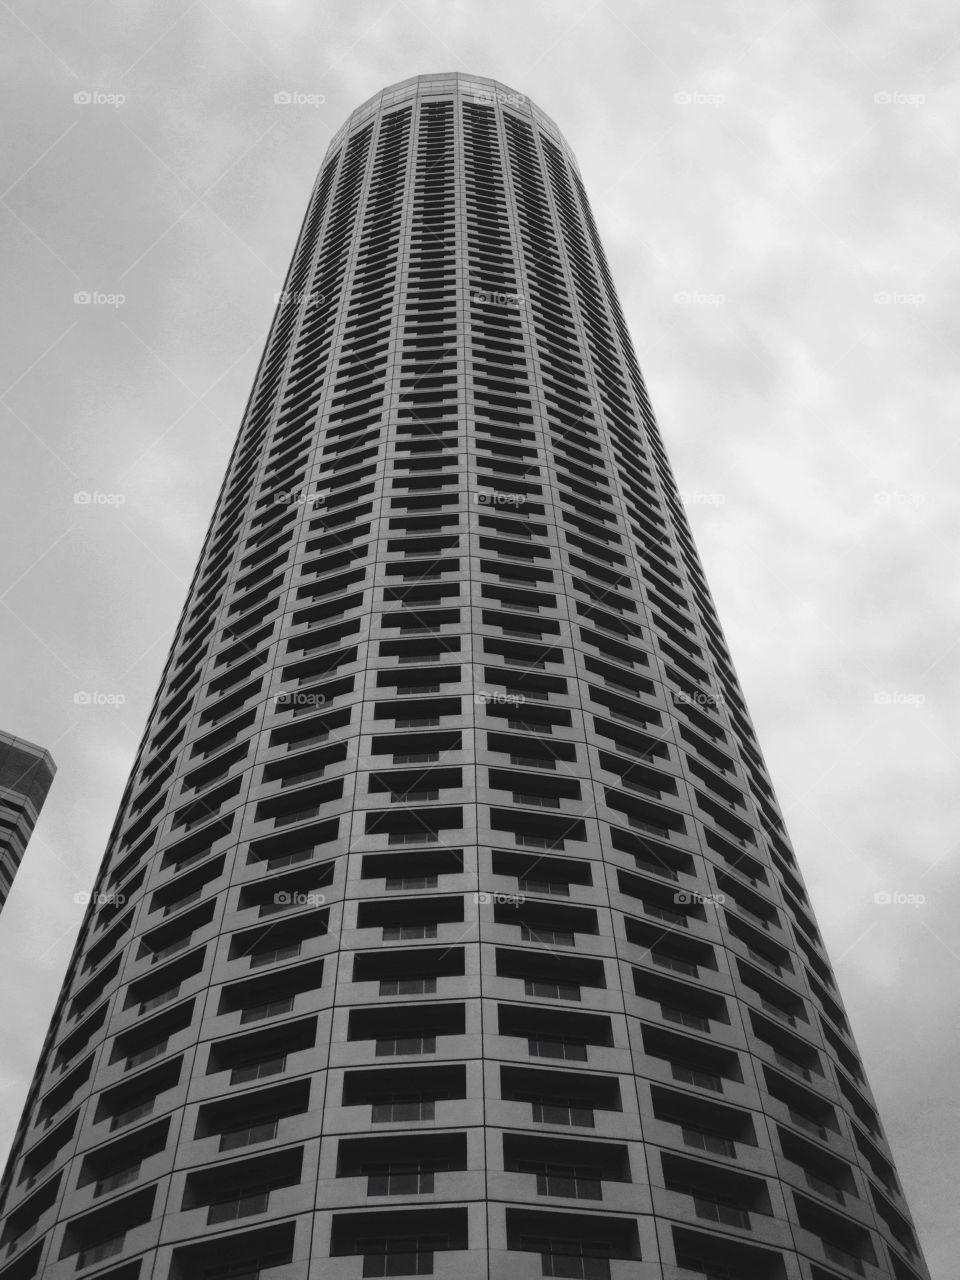 Skyscraper in Singapore